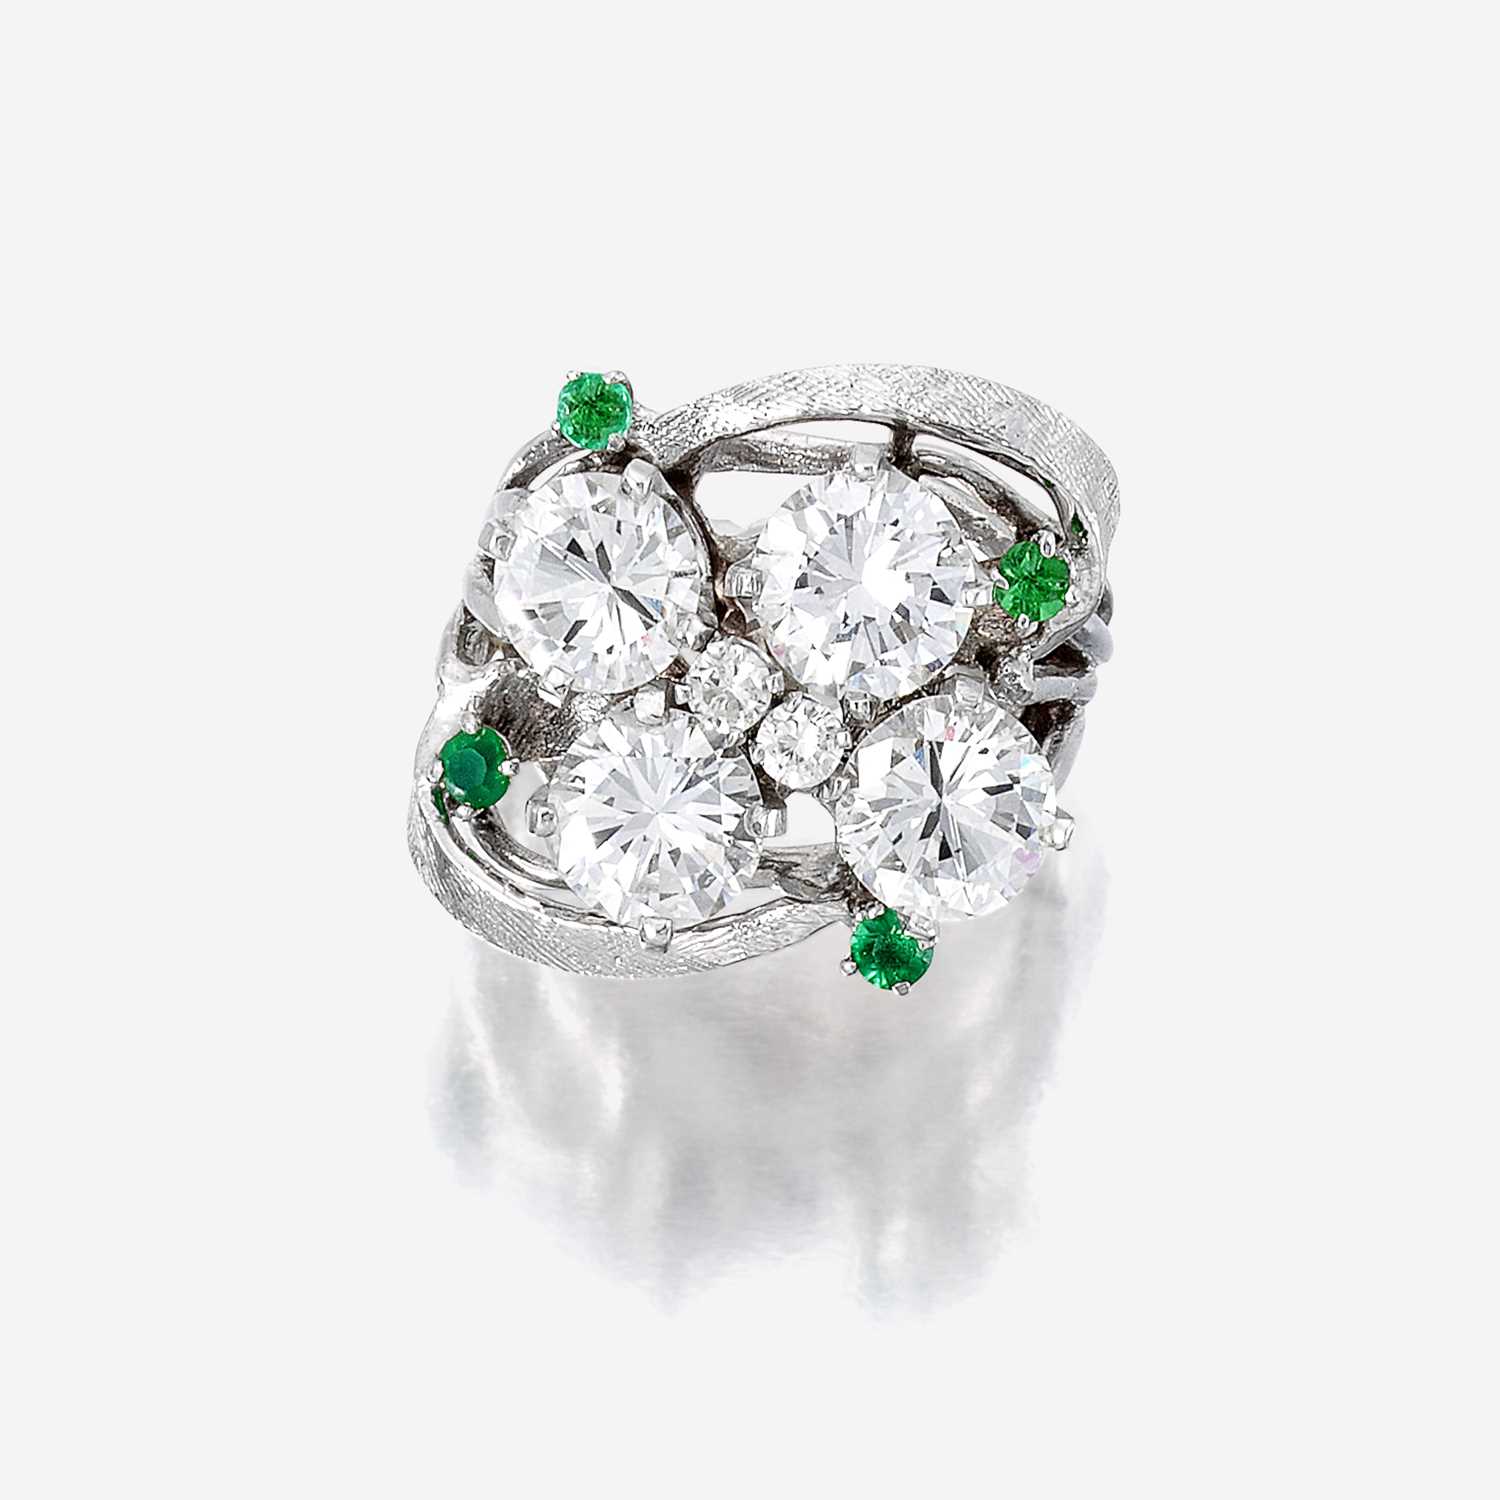 Lot 95 - A diamond, green stone, and fourteen karat white gold ring